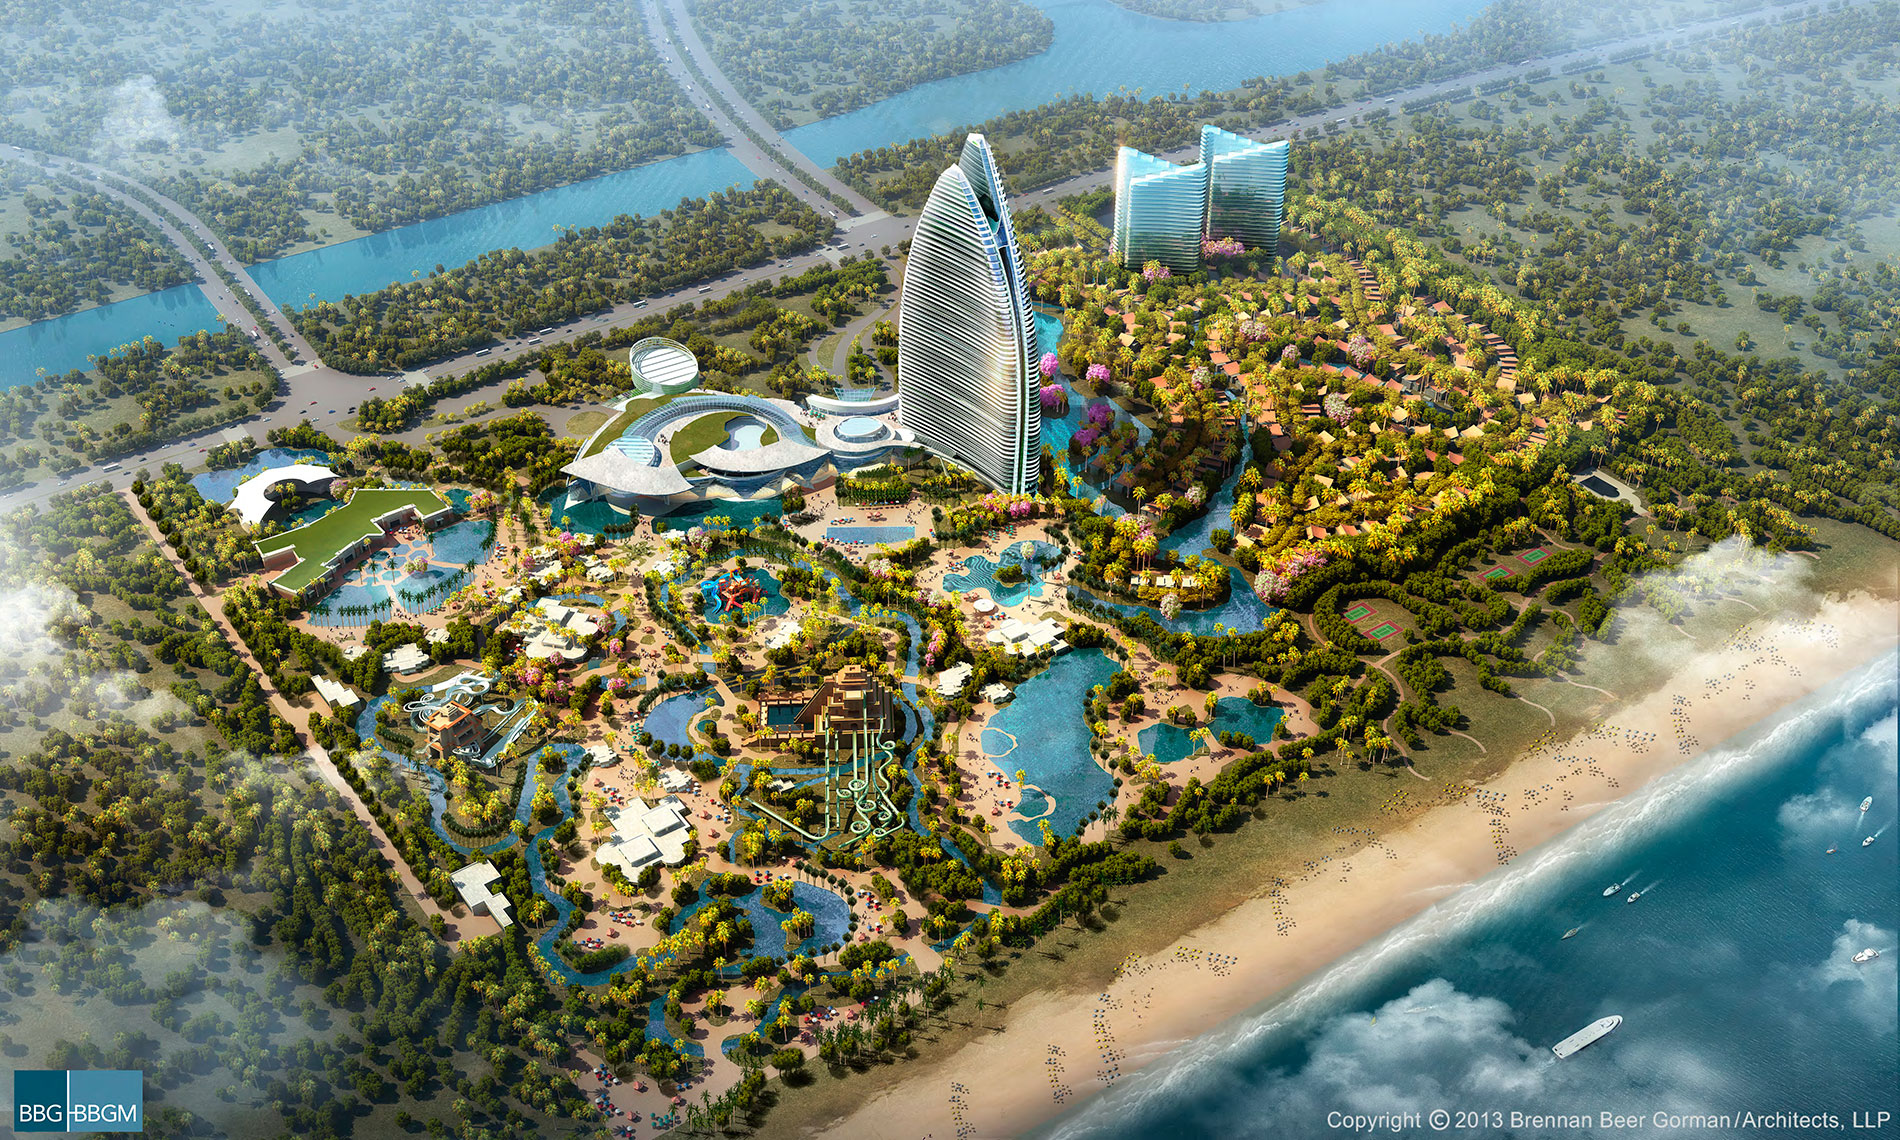 Kerzner to launch First Atlantis in Sanya, China